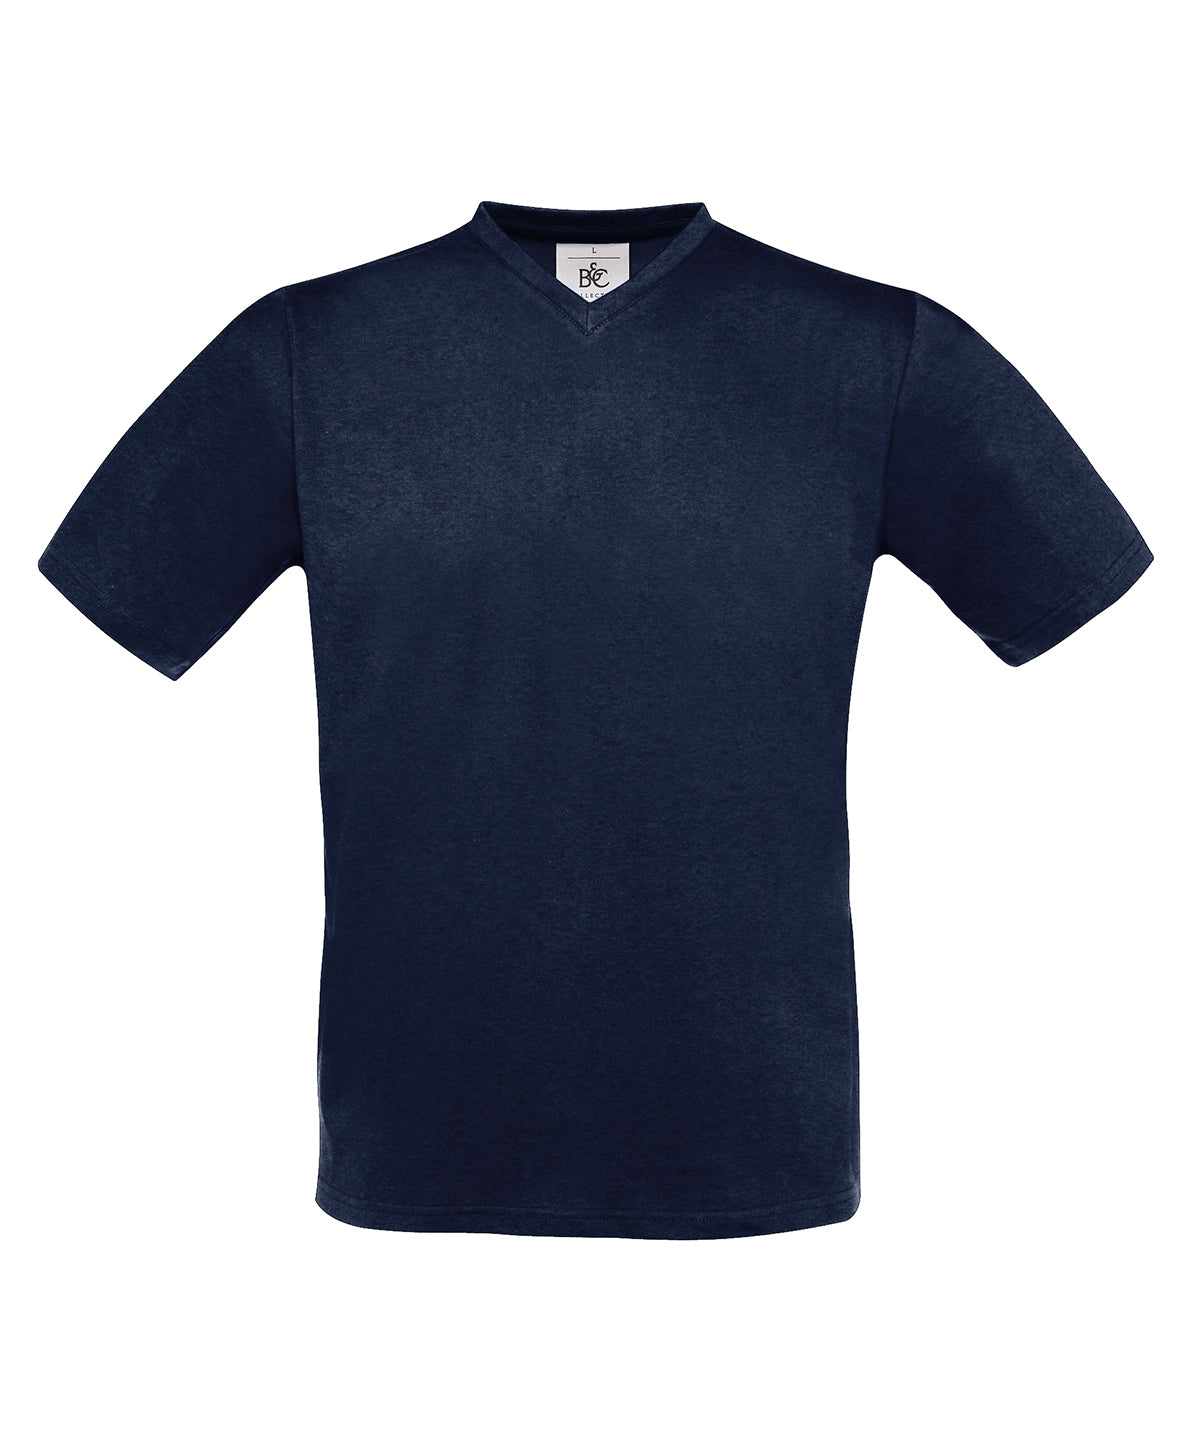 Personalised T-Shirts - Black B&C Collection B&C Exact v-neck